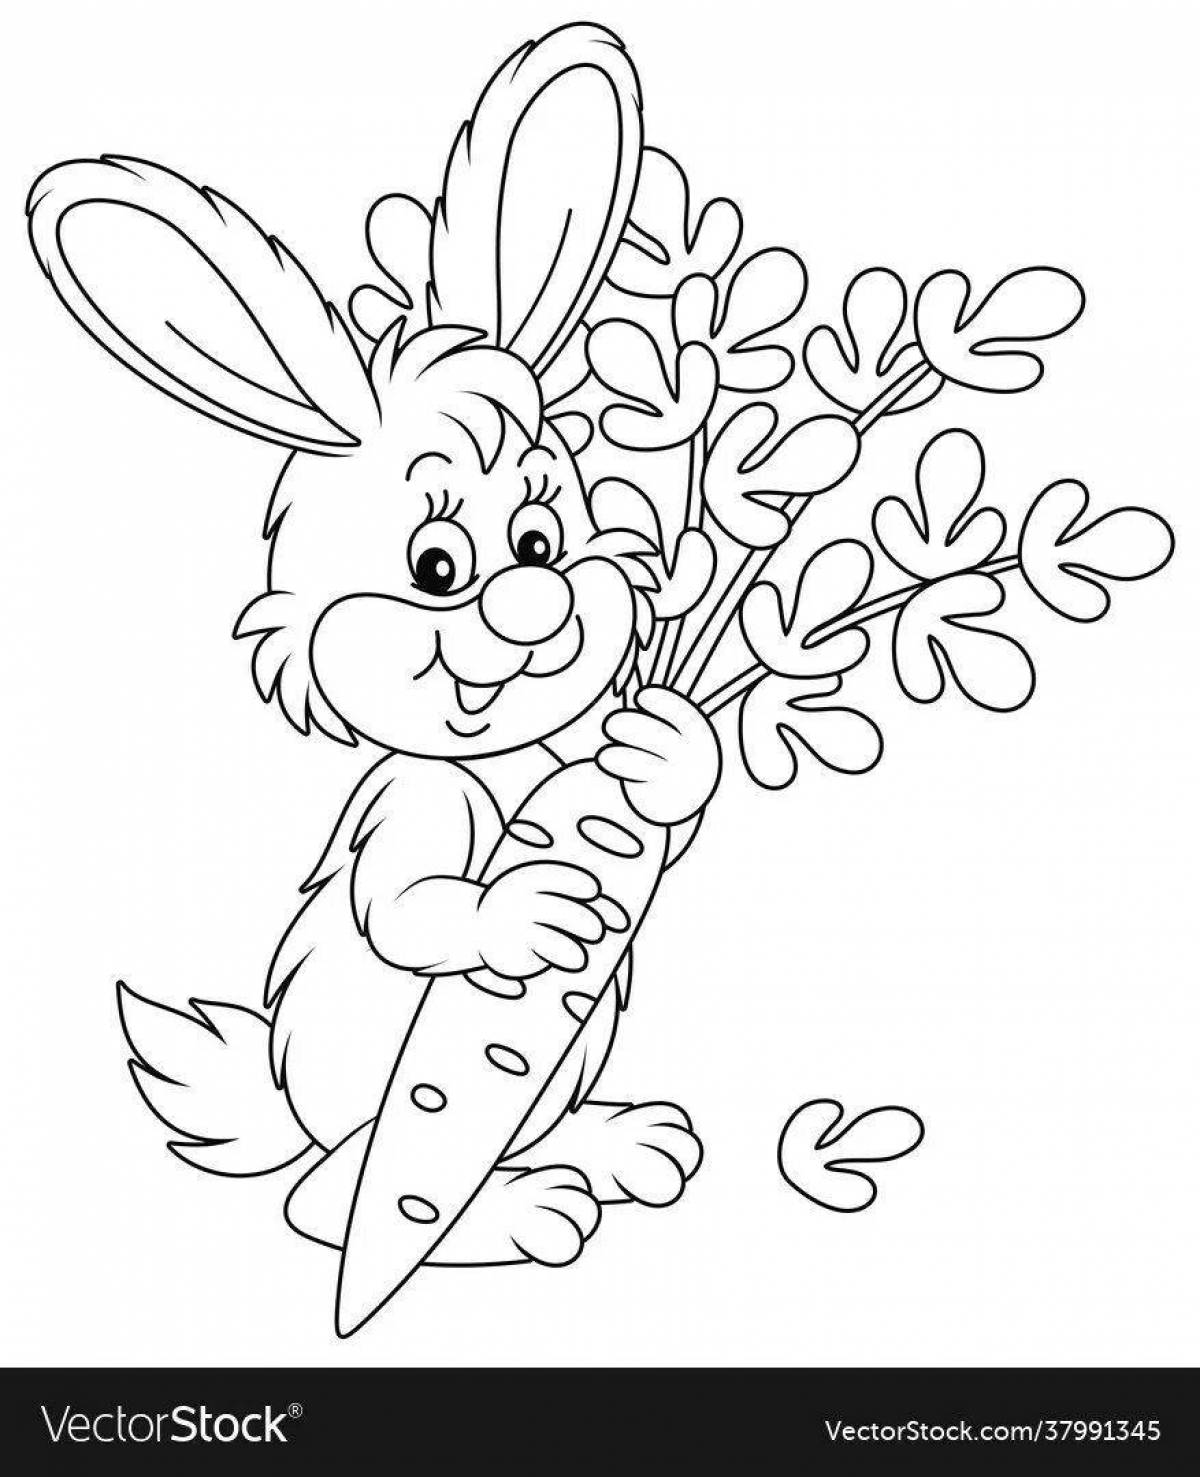 Carrot bunny #2